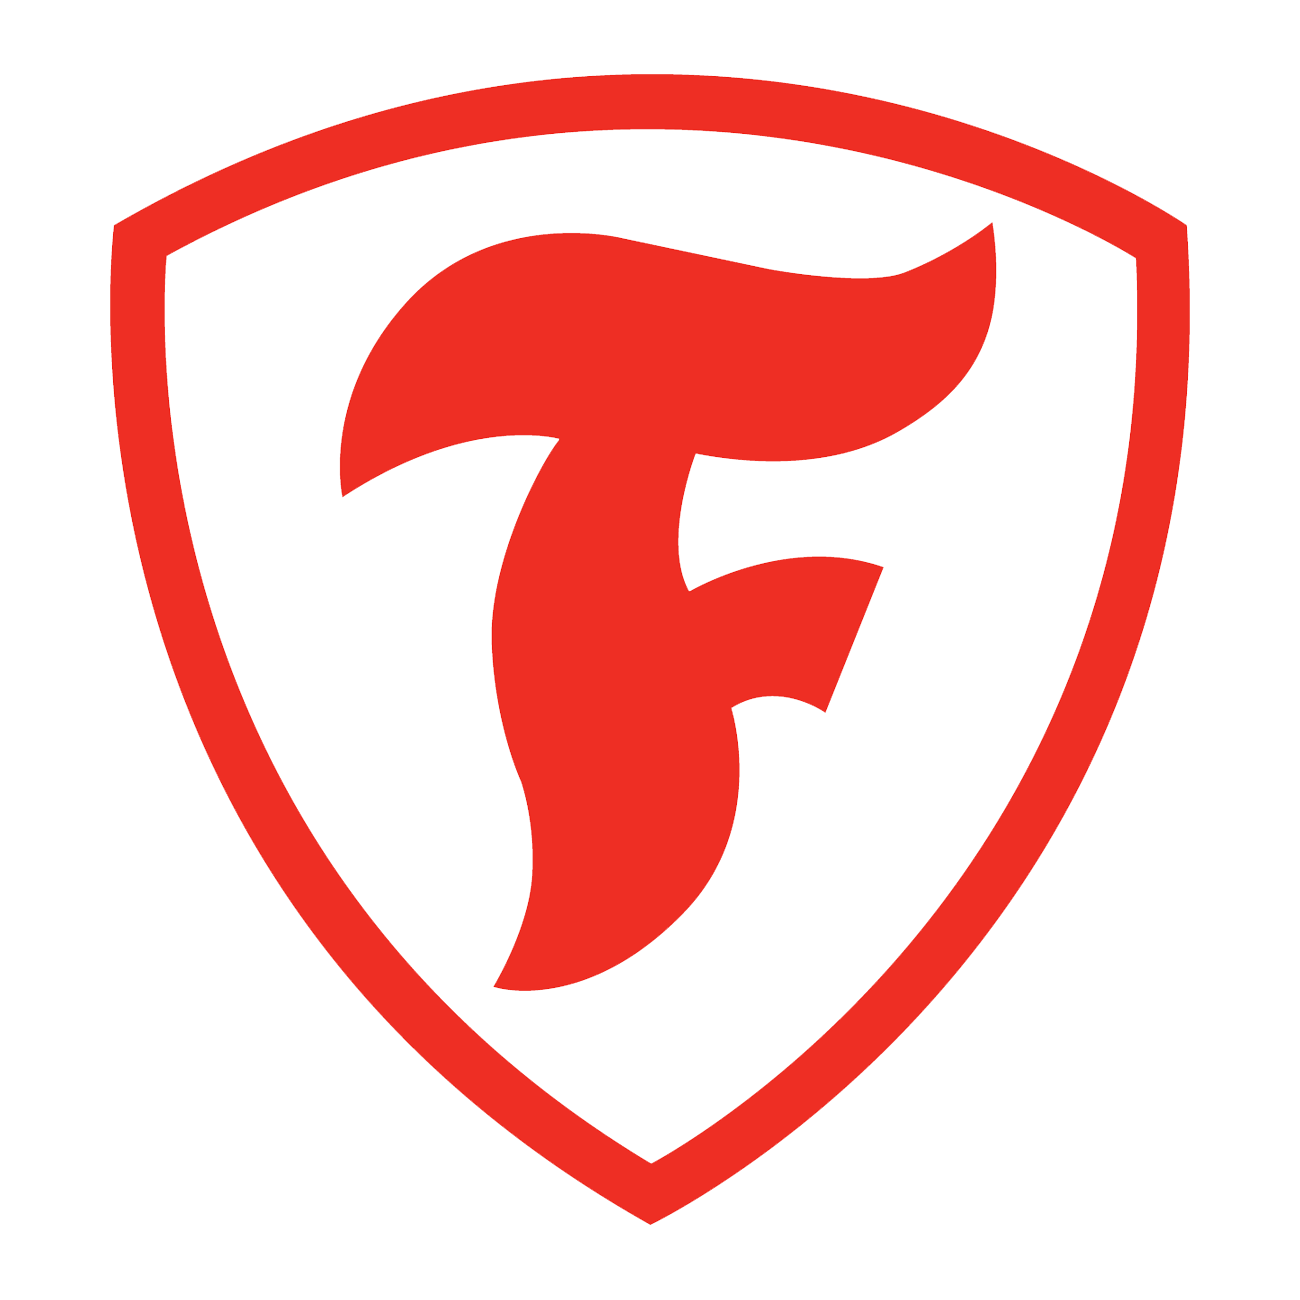 Firestone Logo Png Transparen